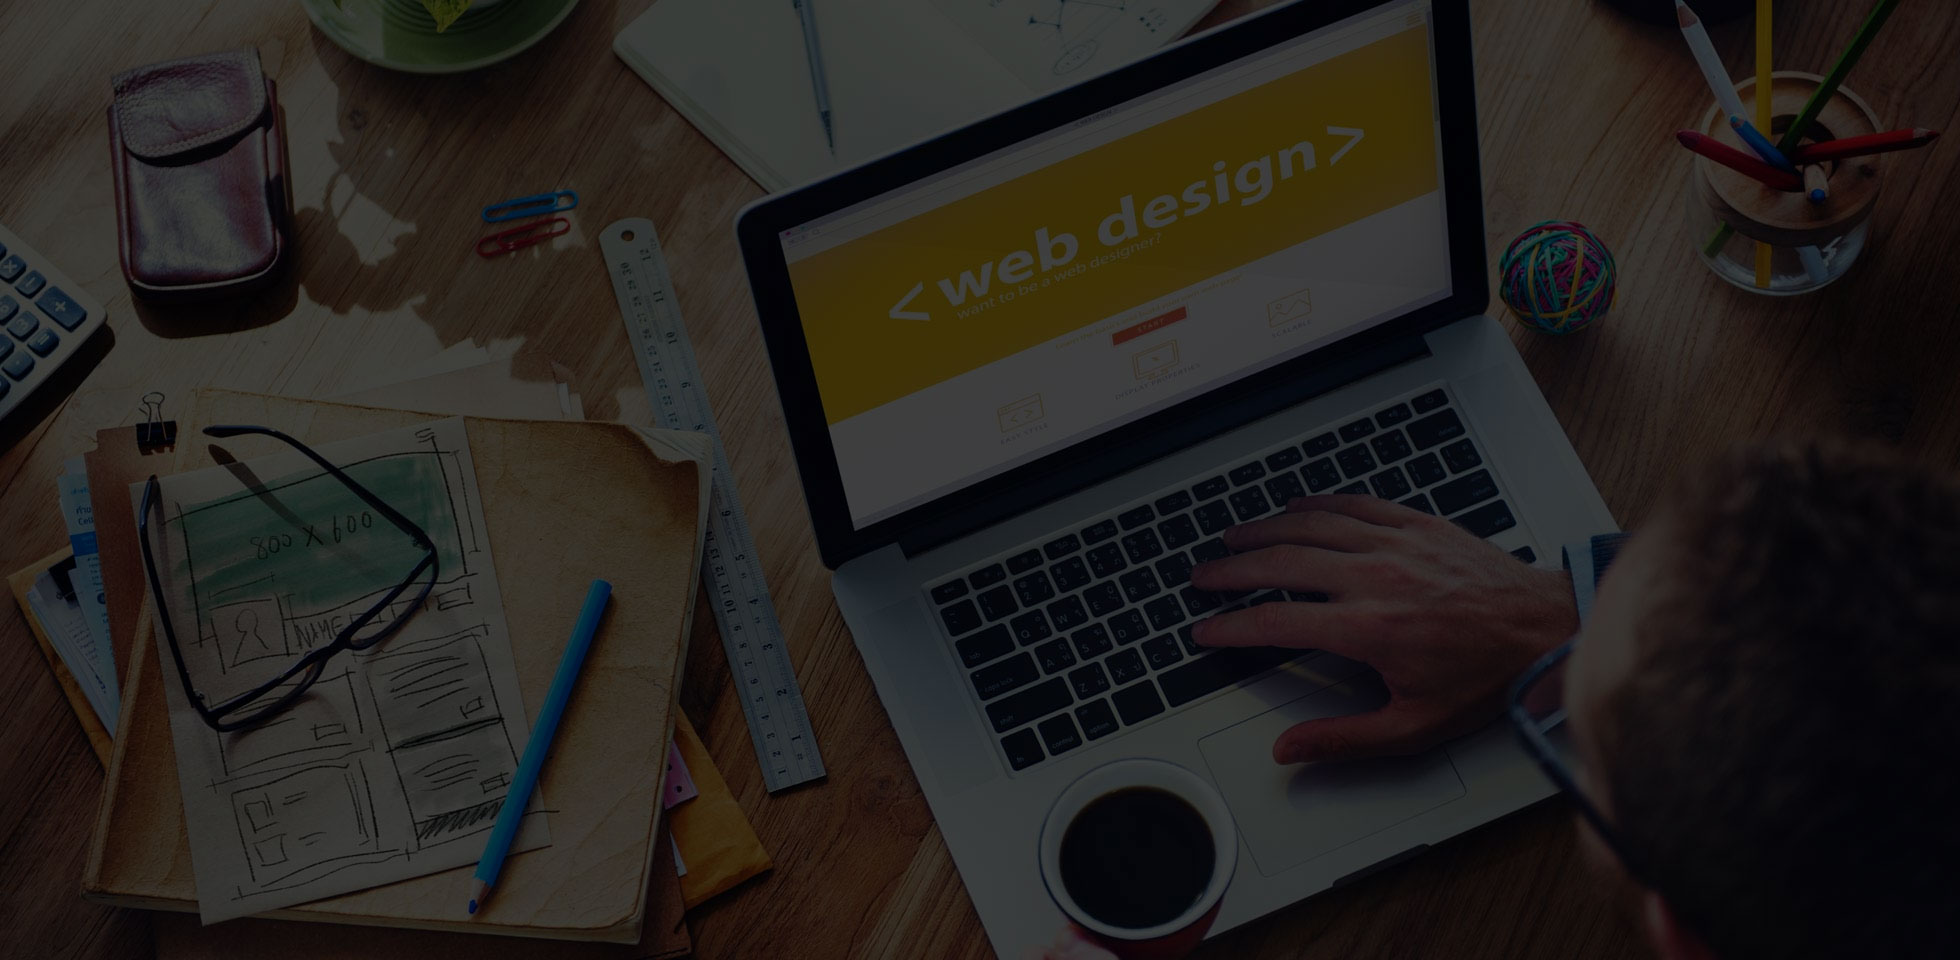 Web Design & Communication